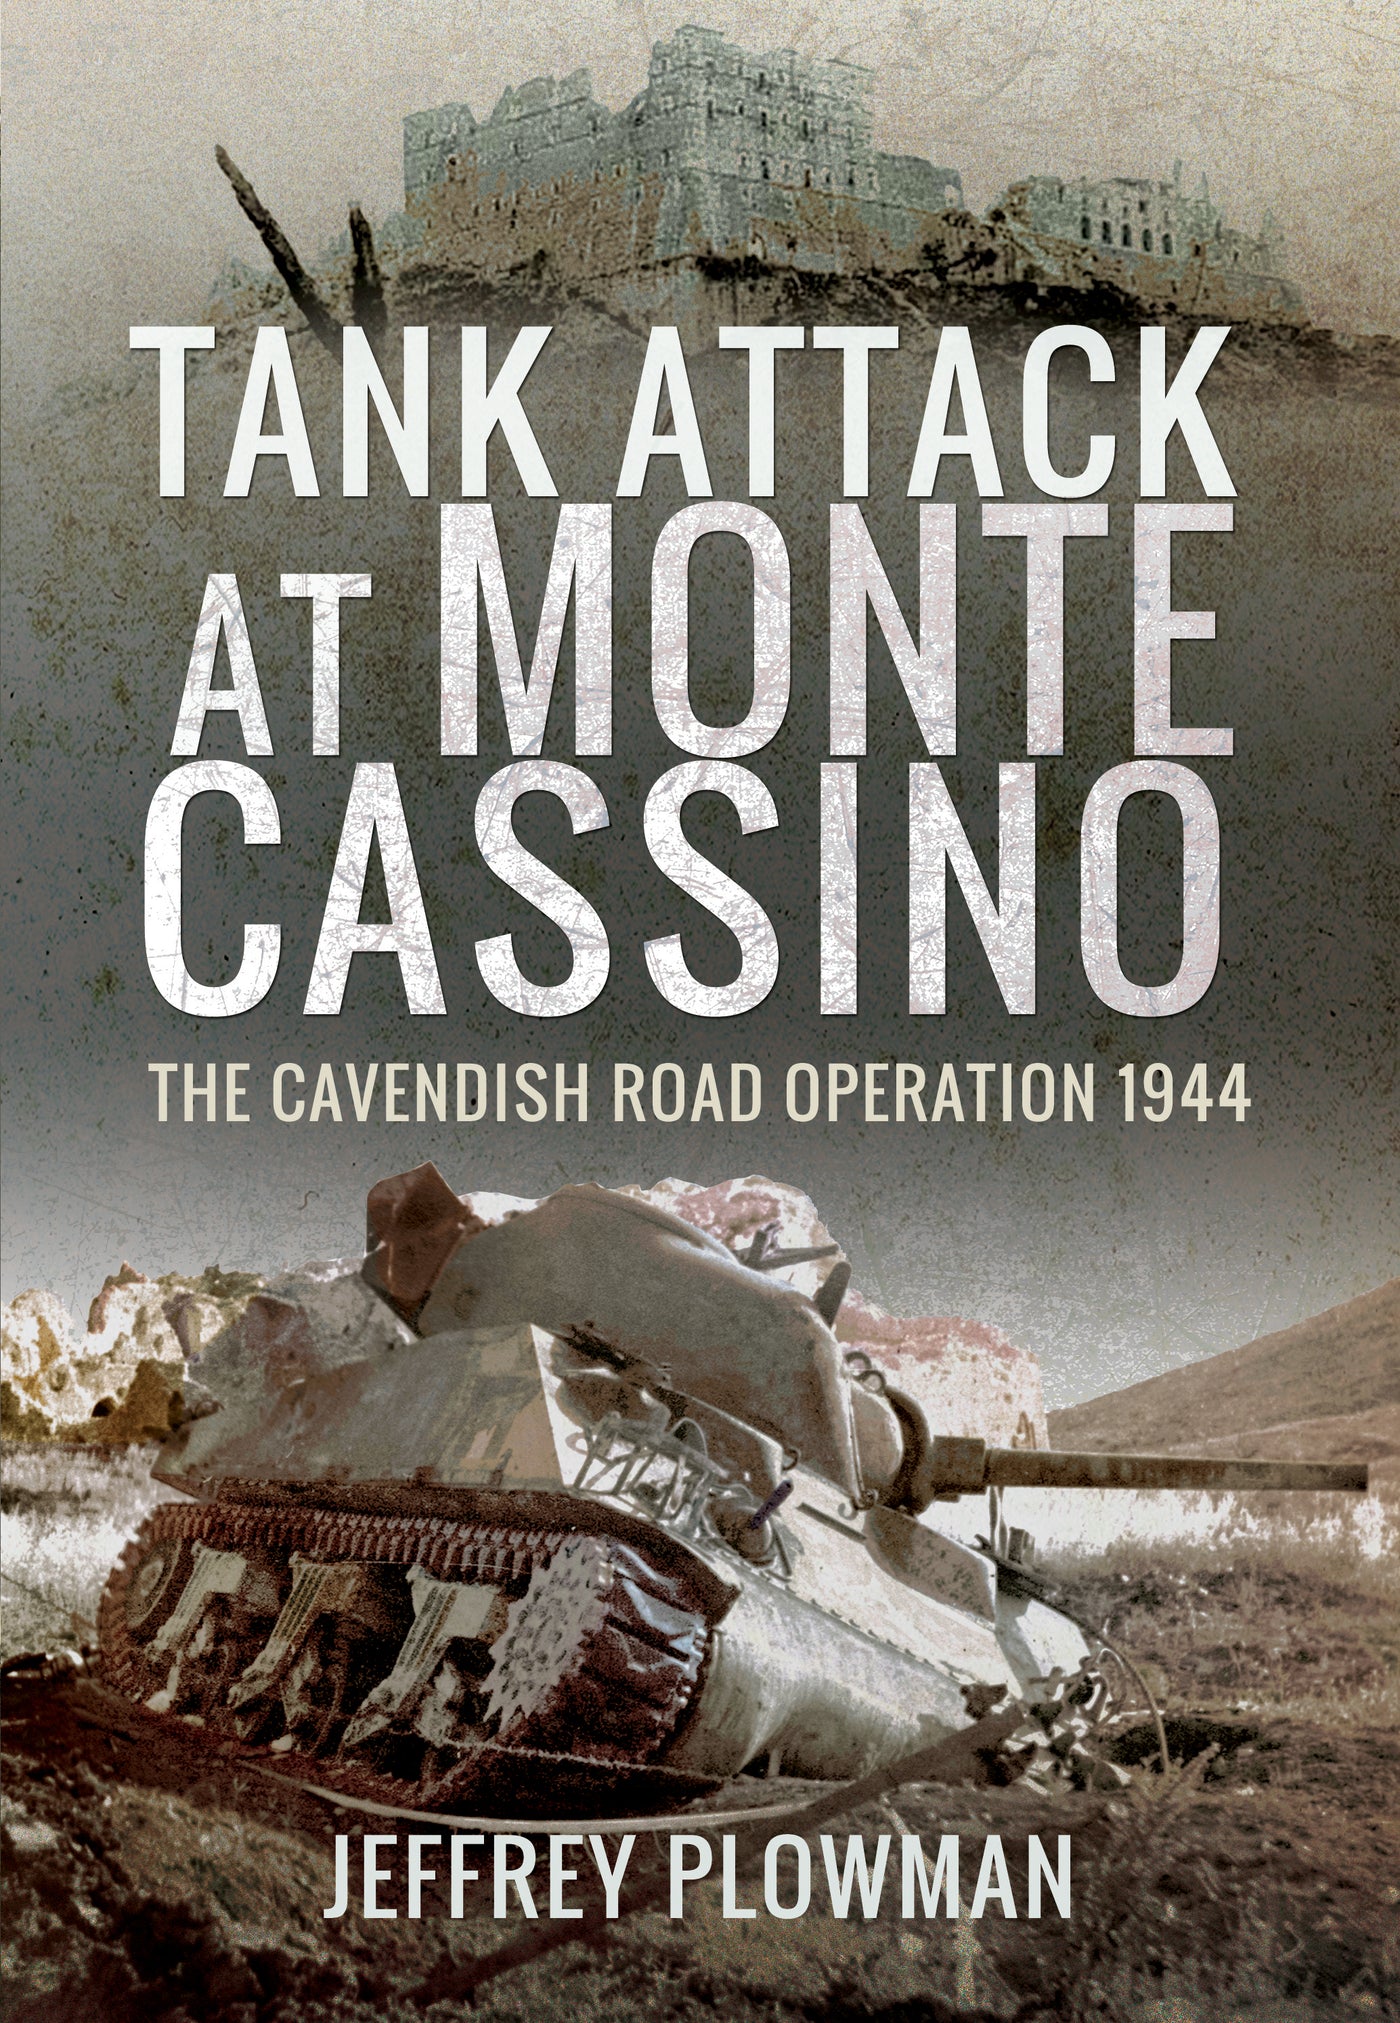 Tank Attack at Monte Cassino